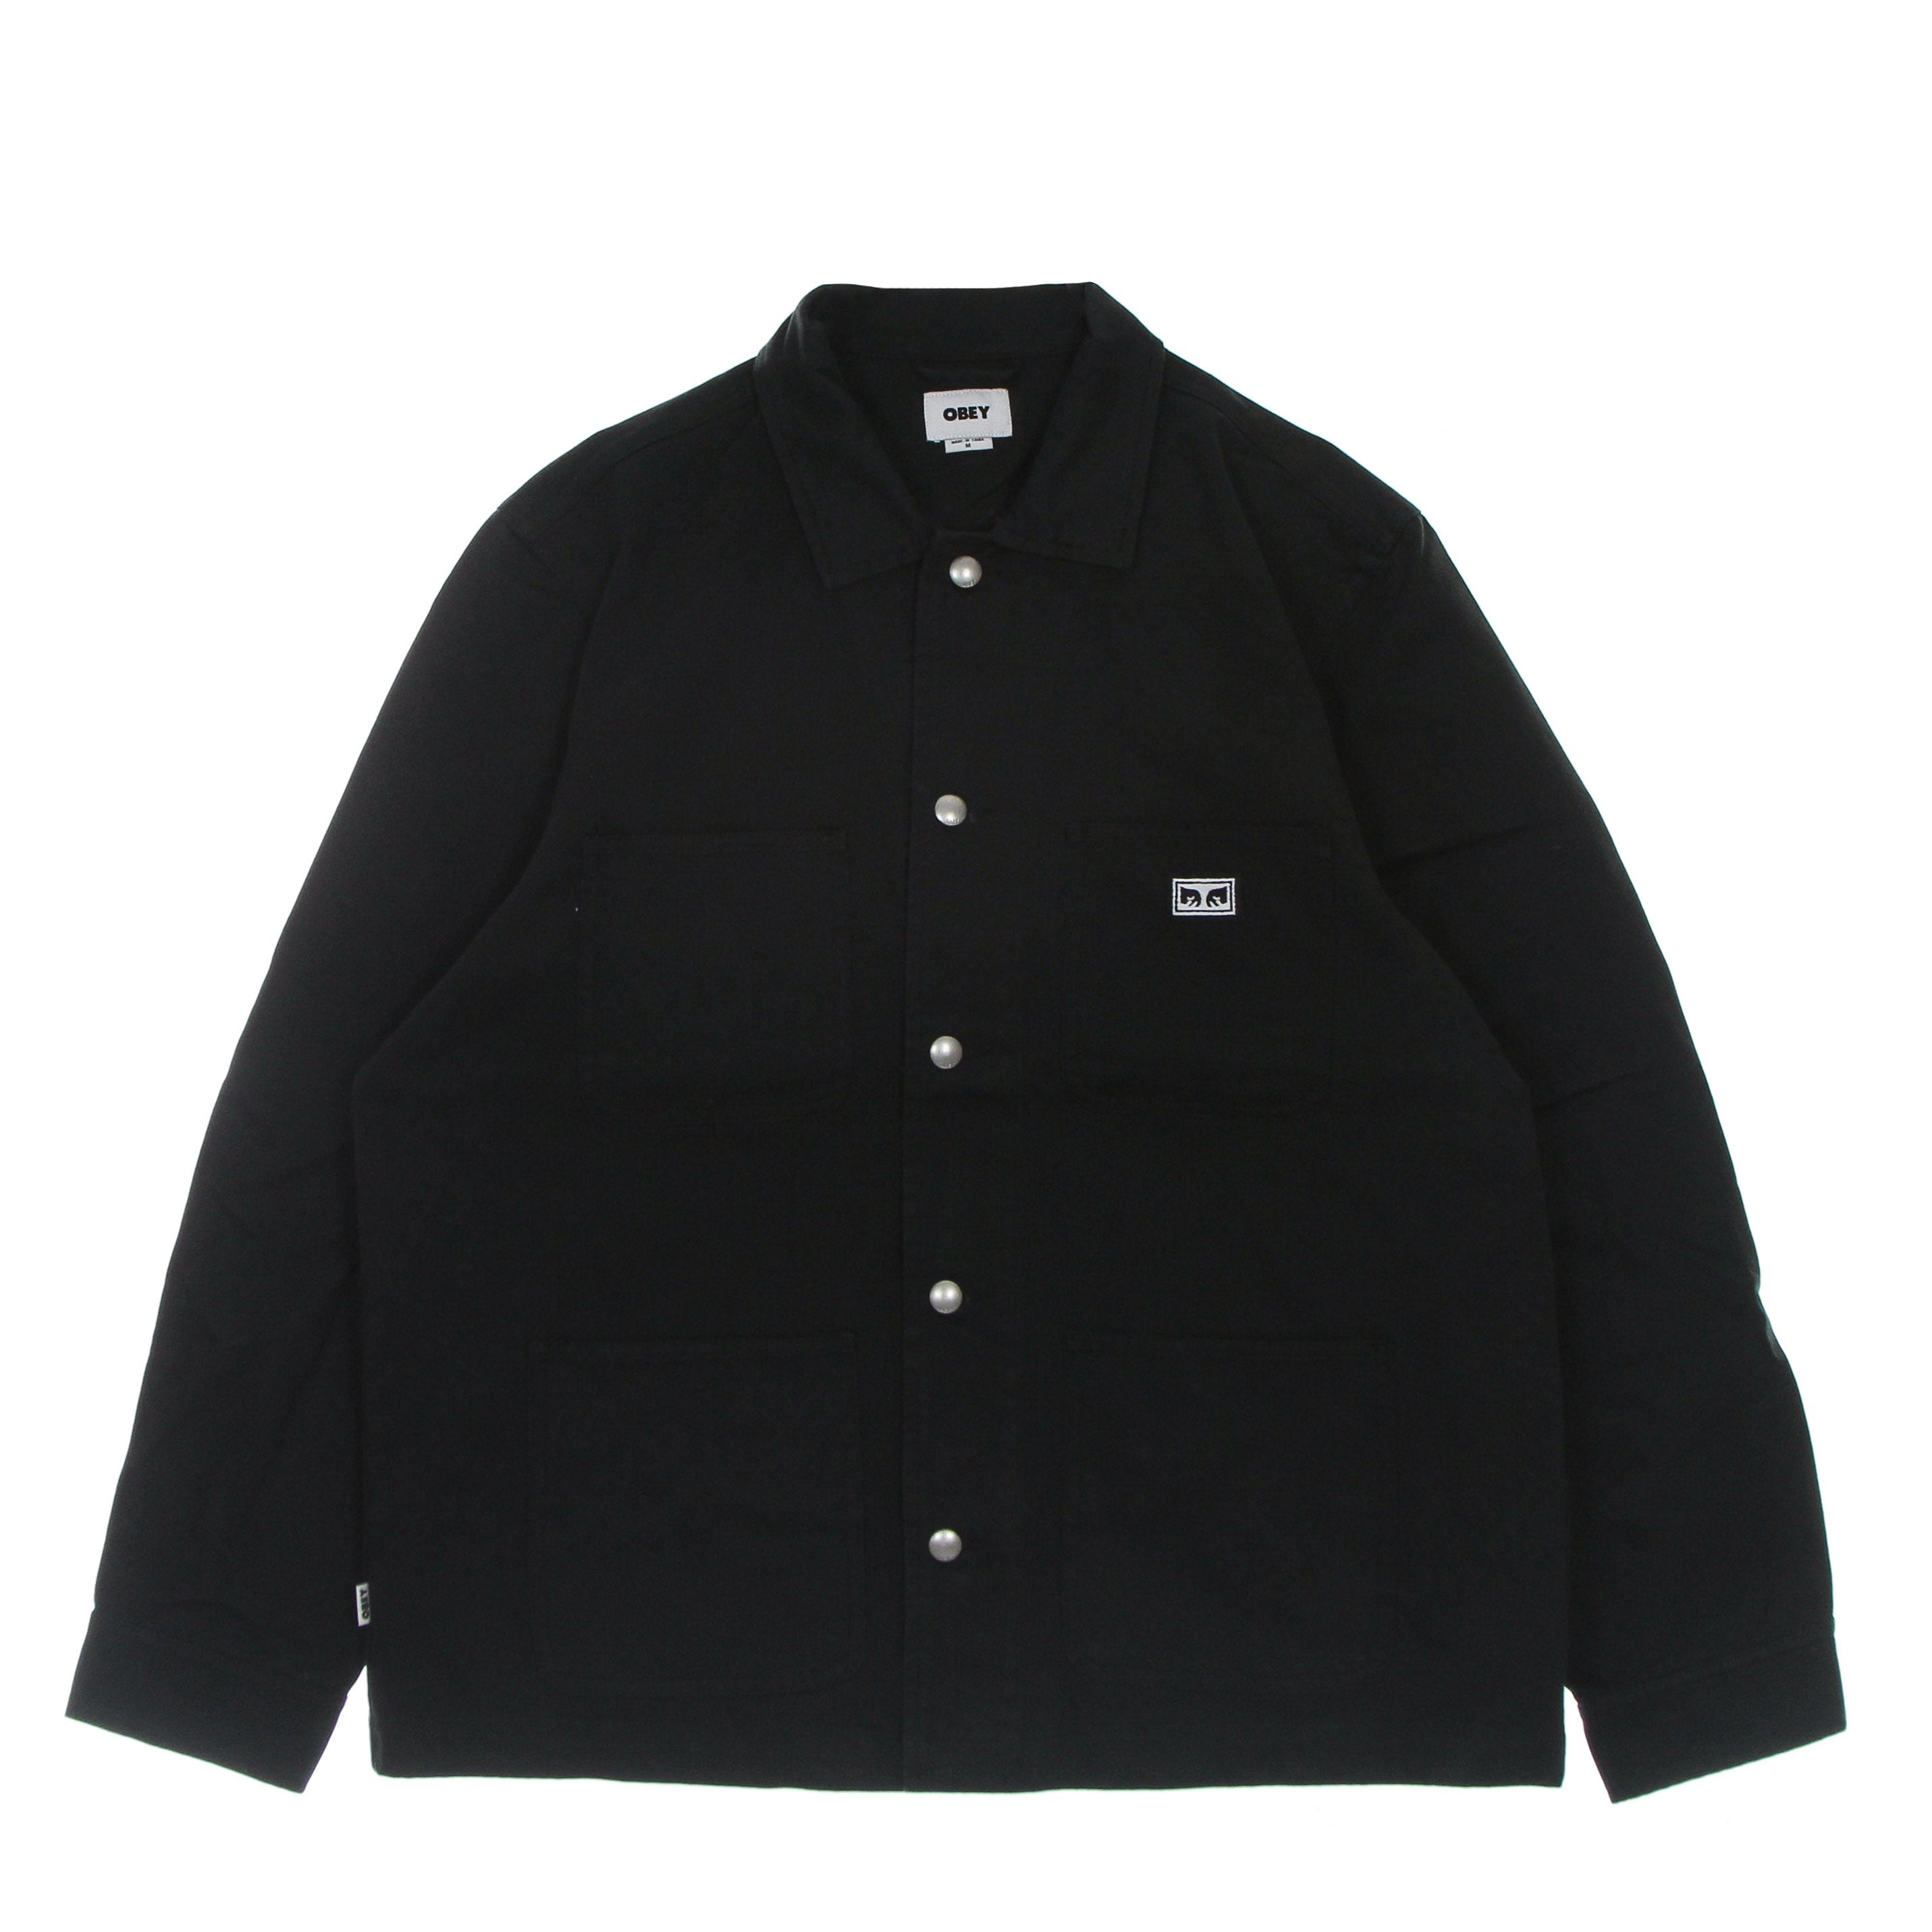 Obey, Giacca Workwear Uomo Estate Jacket, Black